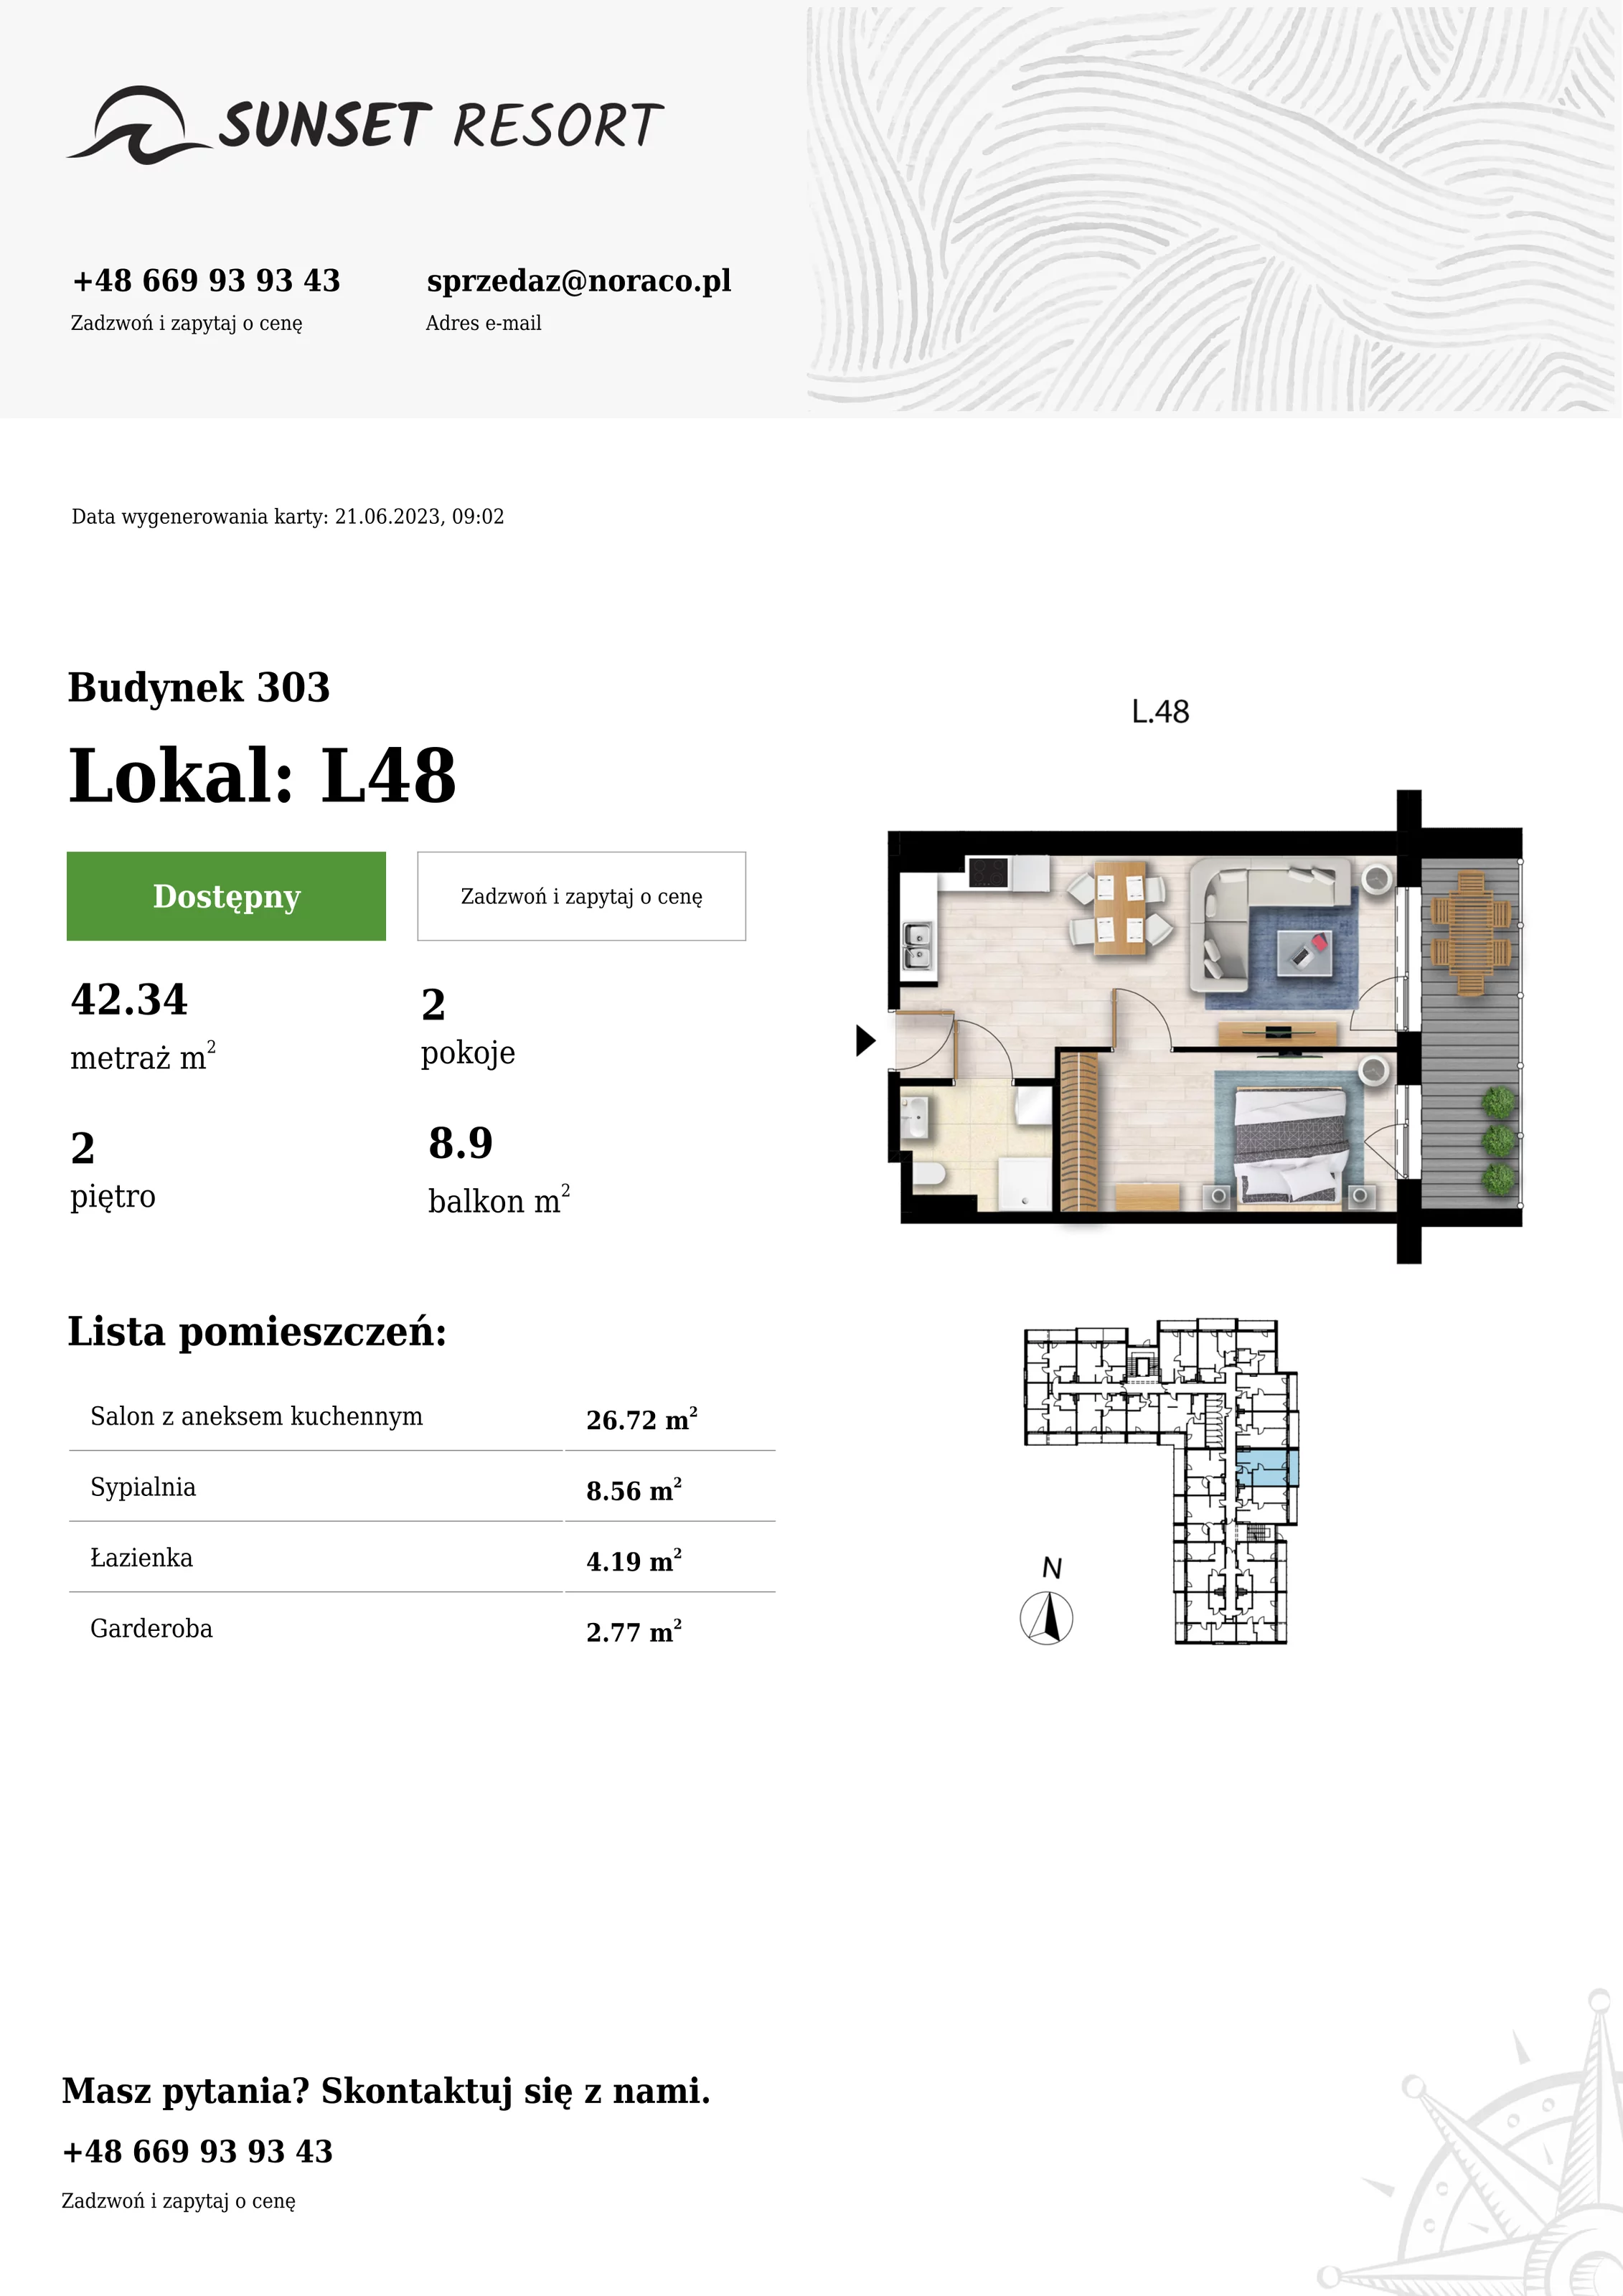 Apartament 42,34 m², piętro 2, oferta nr L48, Sunset Resort, Grzybowo, ul. Nadmorska 106